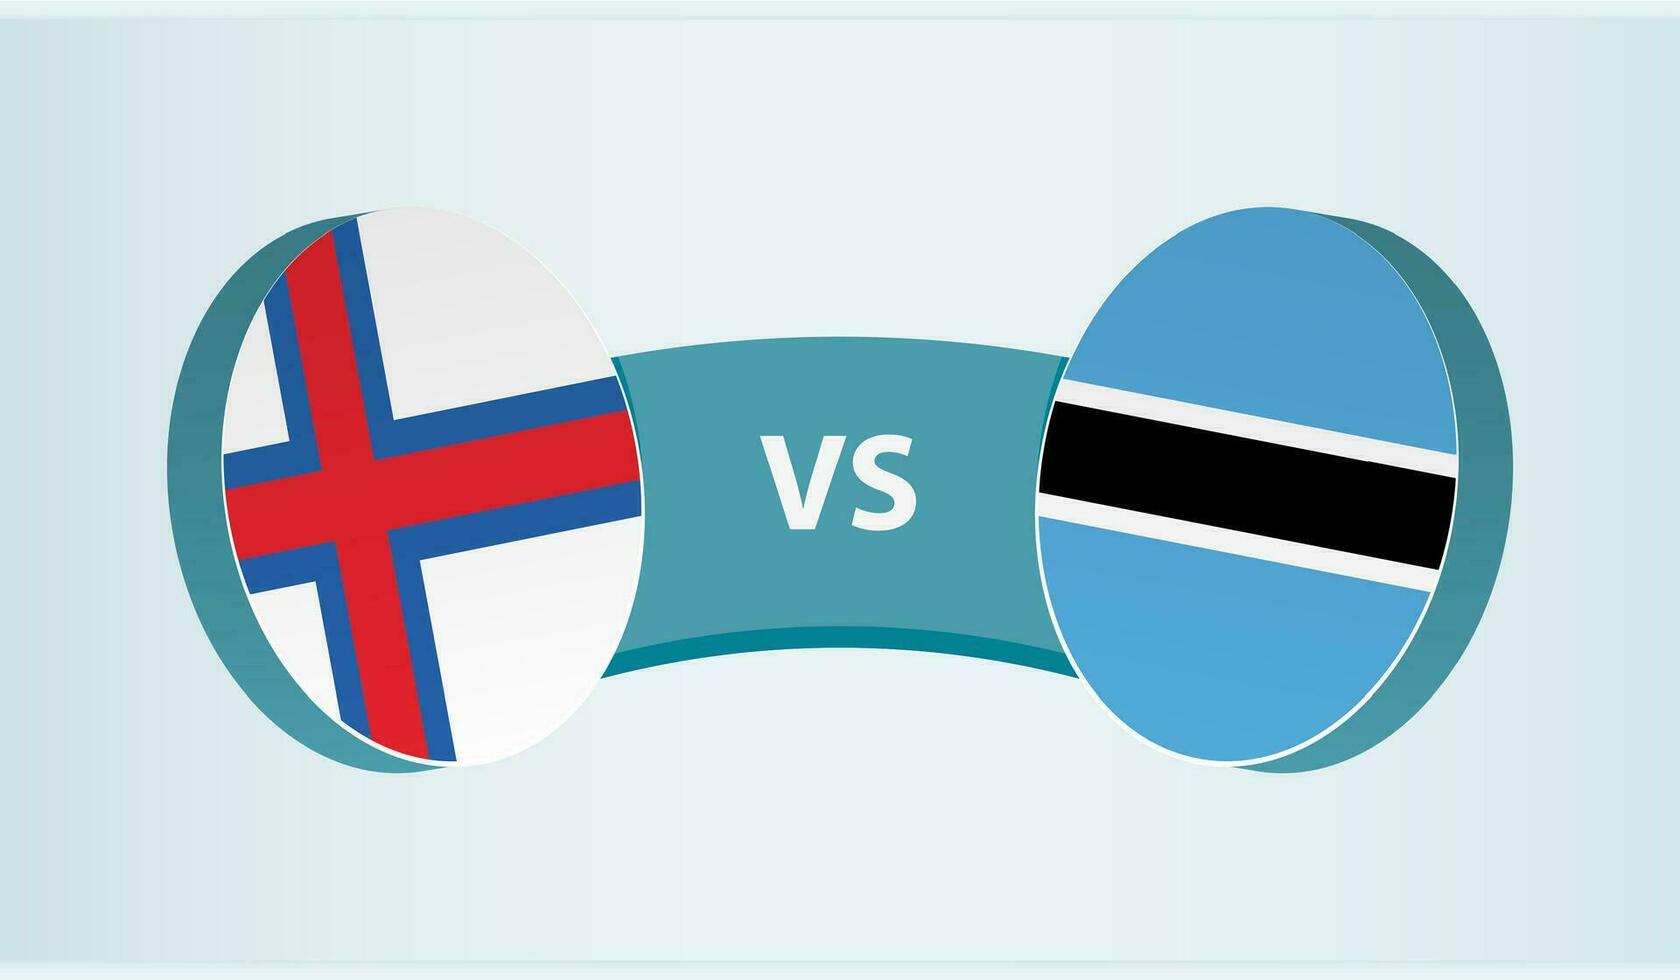 Faroe Islands versus Botswana, team sports competition concept. vector